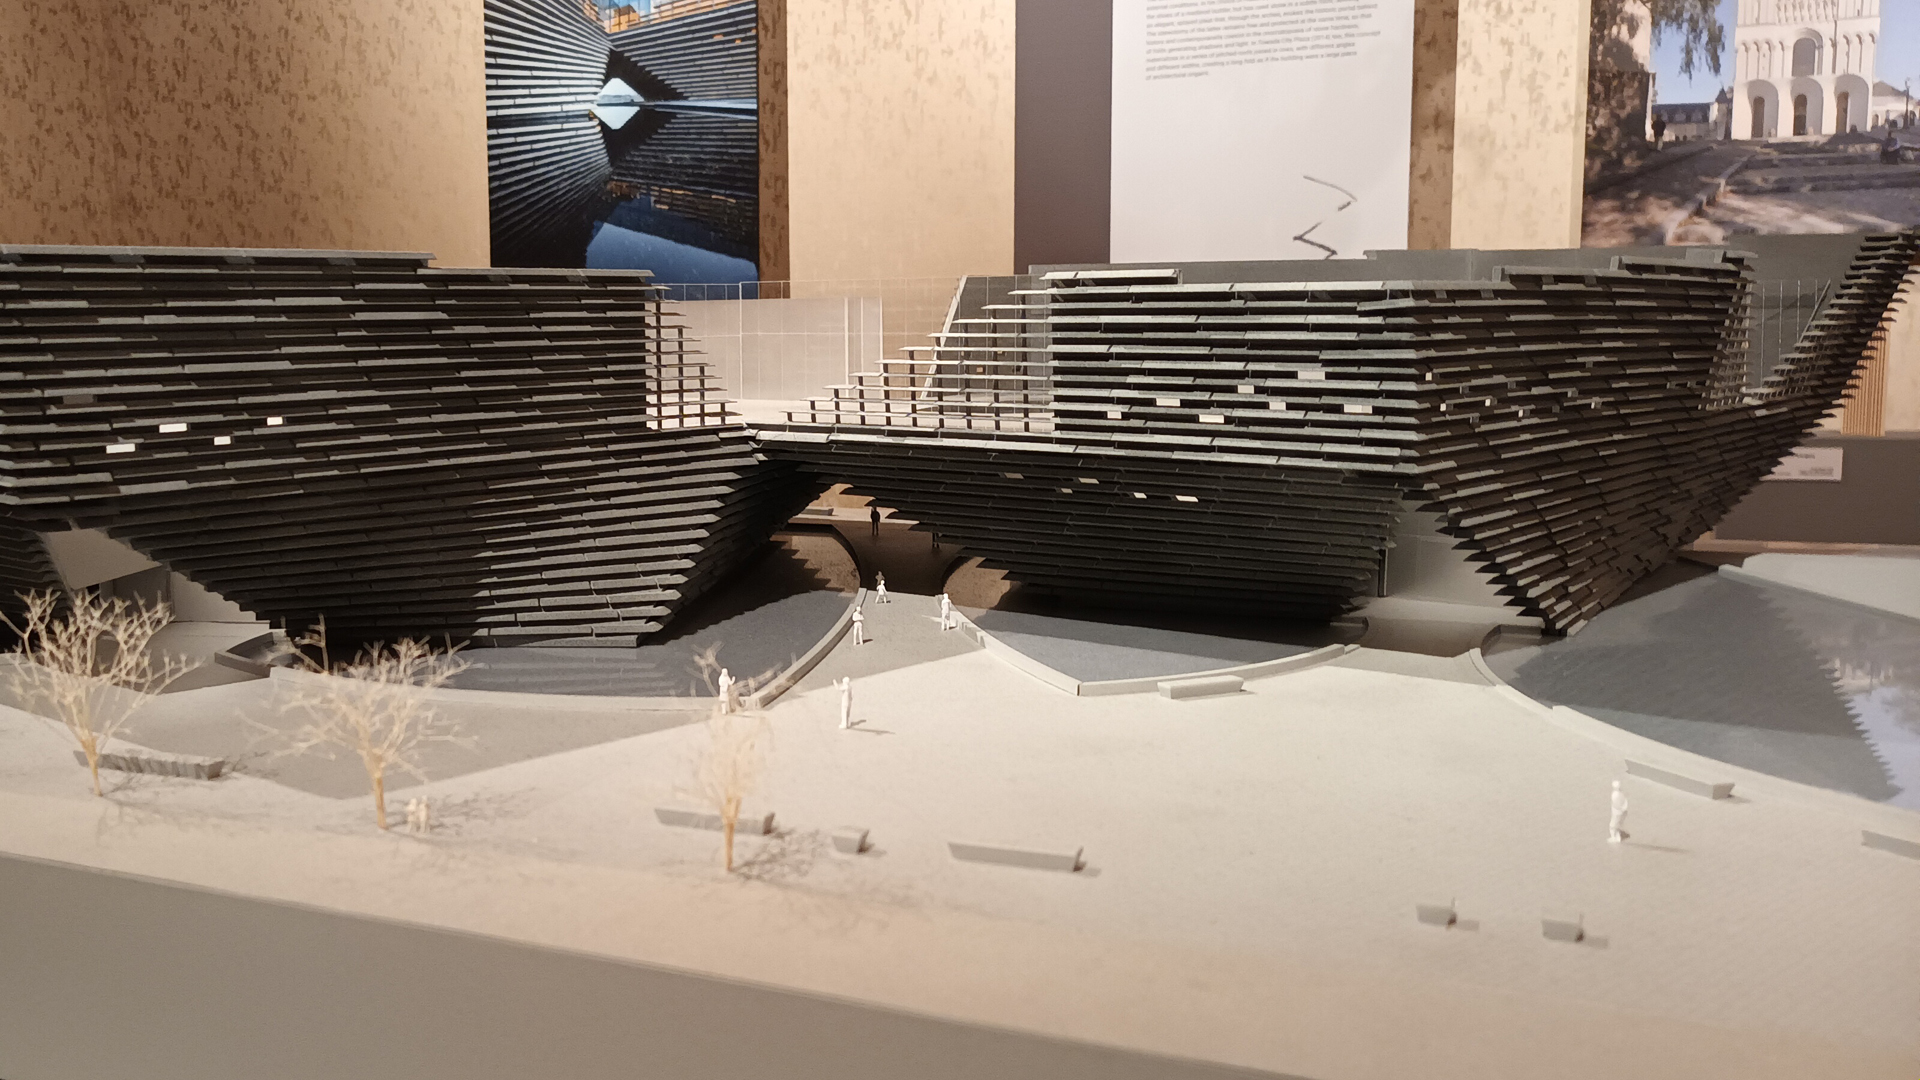 KENZO KUMA, VICTORIA&ALBERT MUSEUM OF DESIGN, DUNDEE 2018